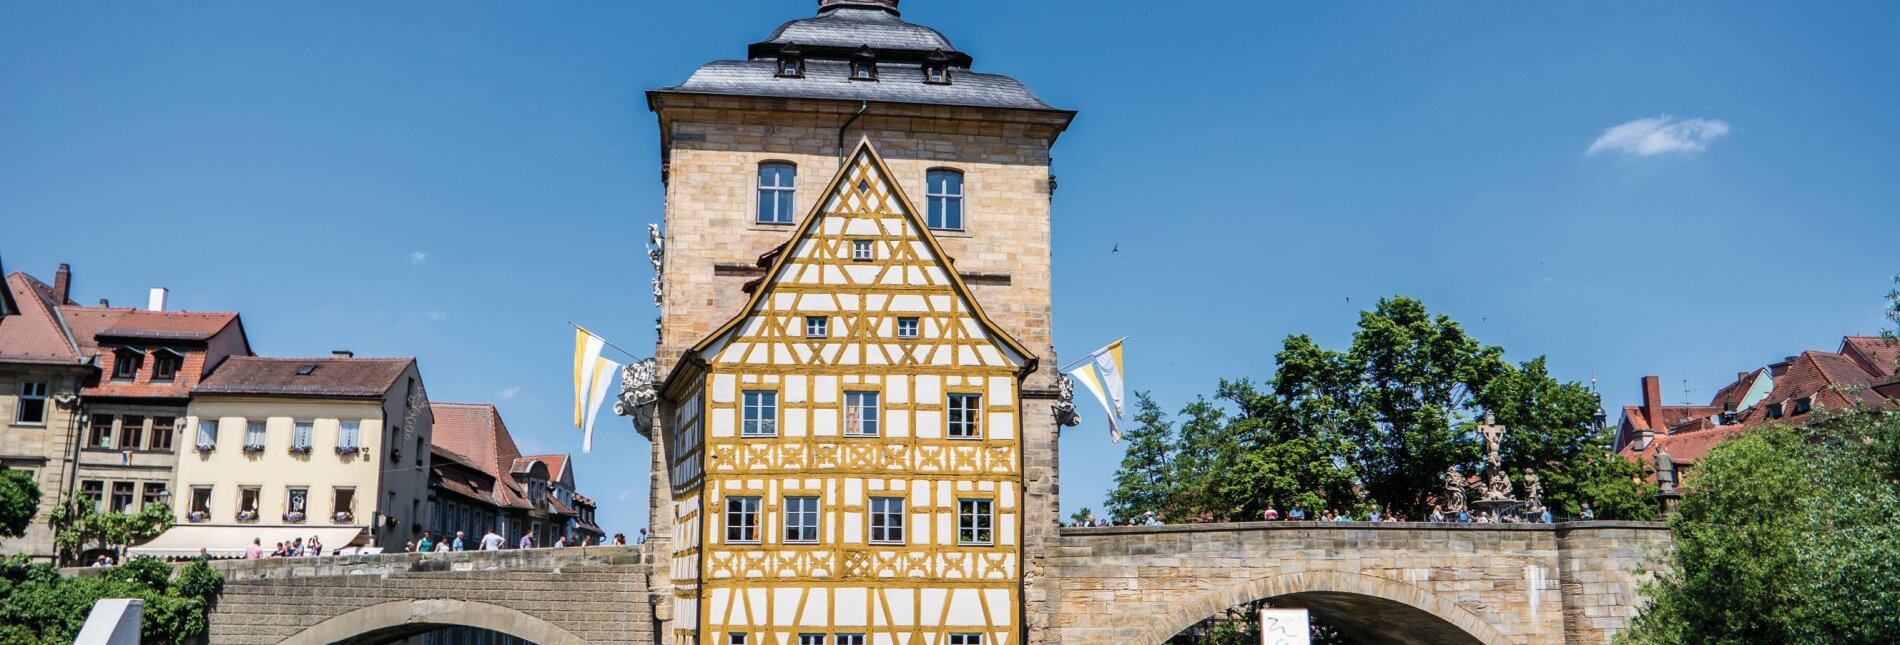 Altes Rathaus, Bamberg